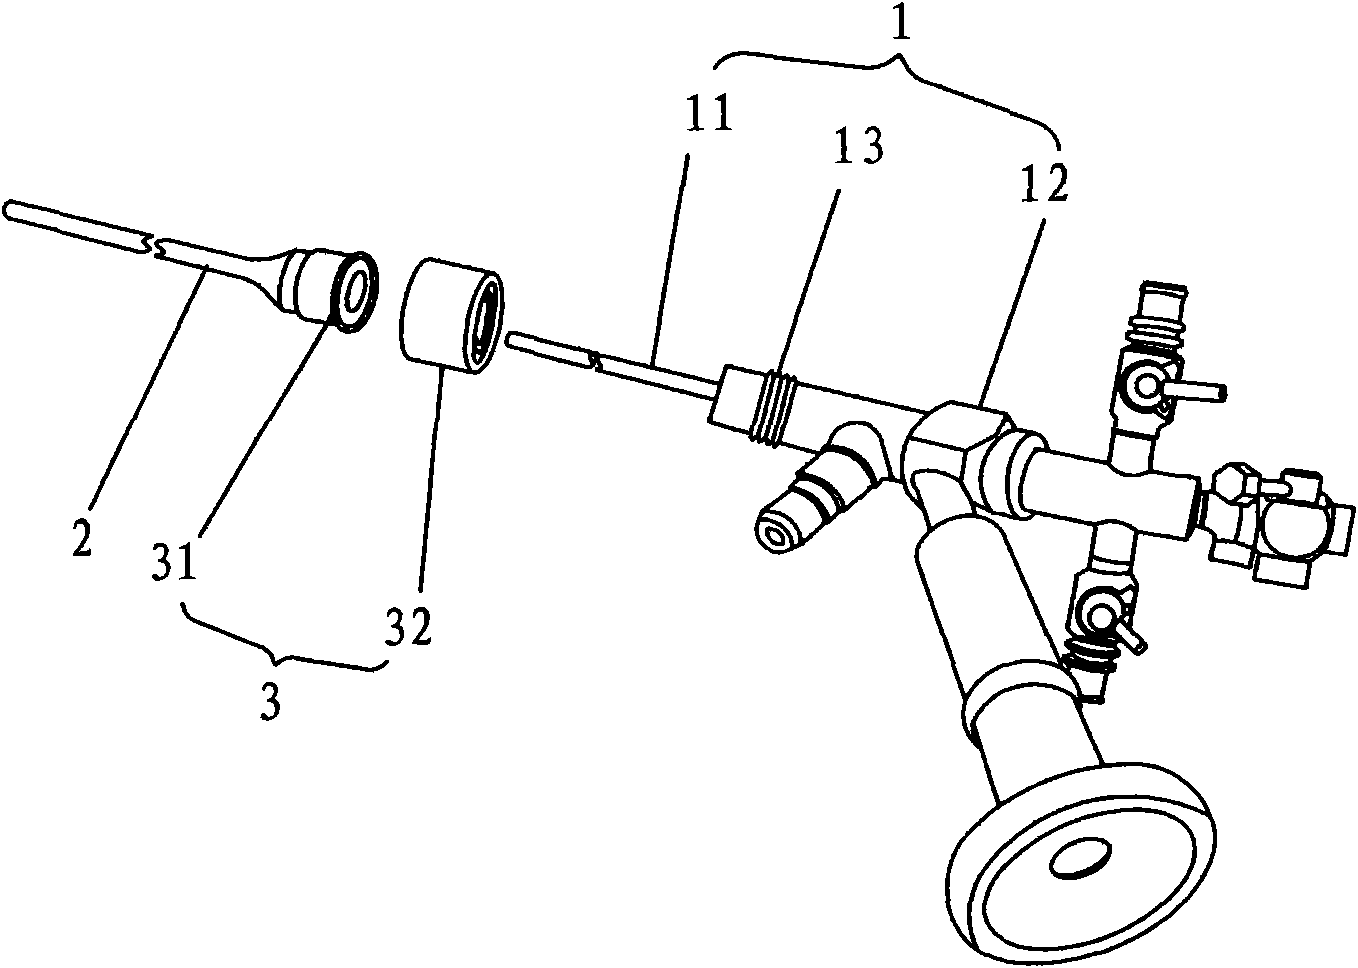 Combined rigid ureteroscope